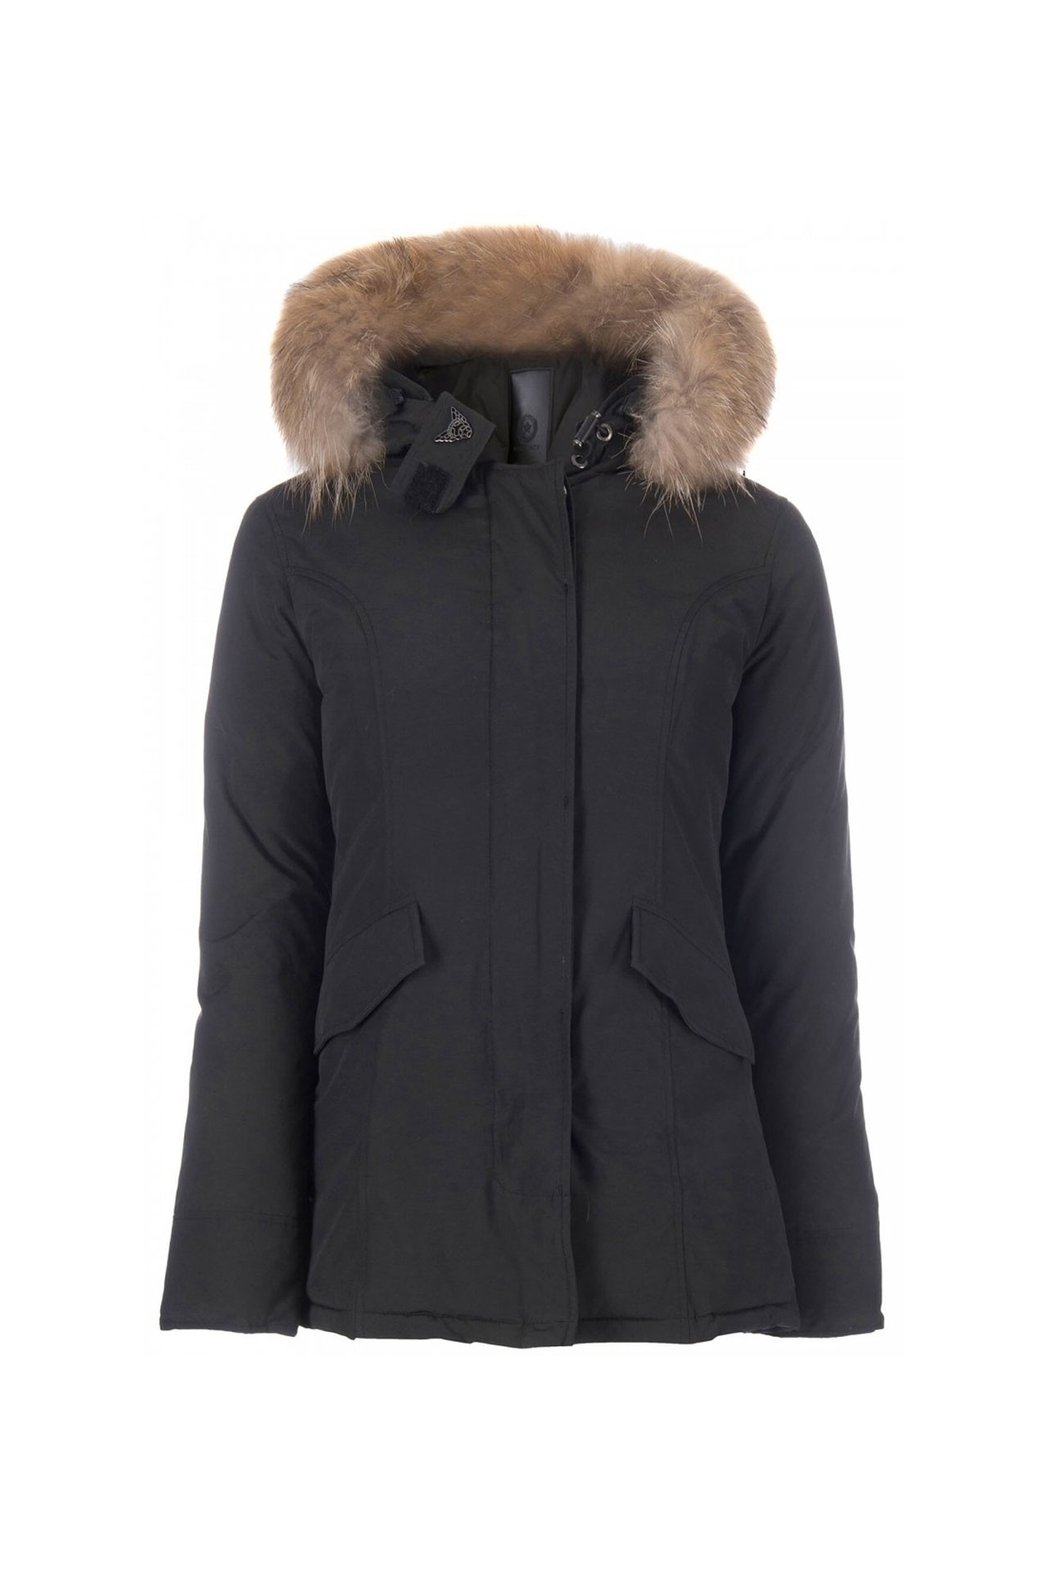 Afdeling Eindig Op de loer liggen Meisjes winterjassen shop je online of in onze winkel in Almere